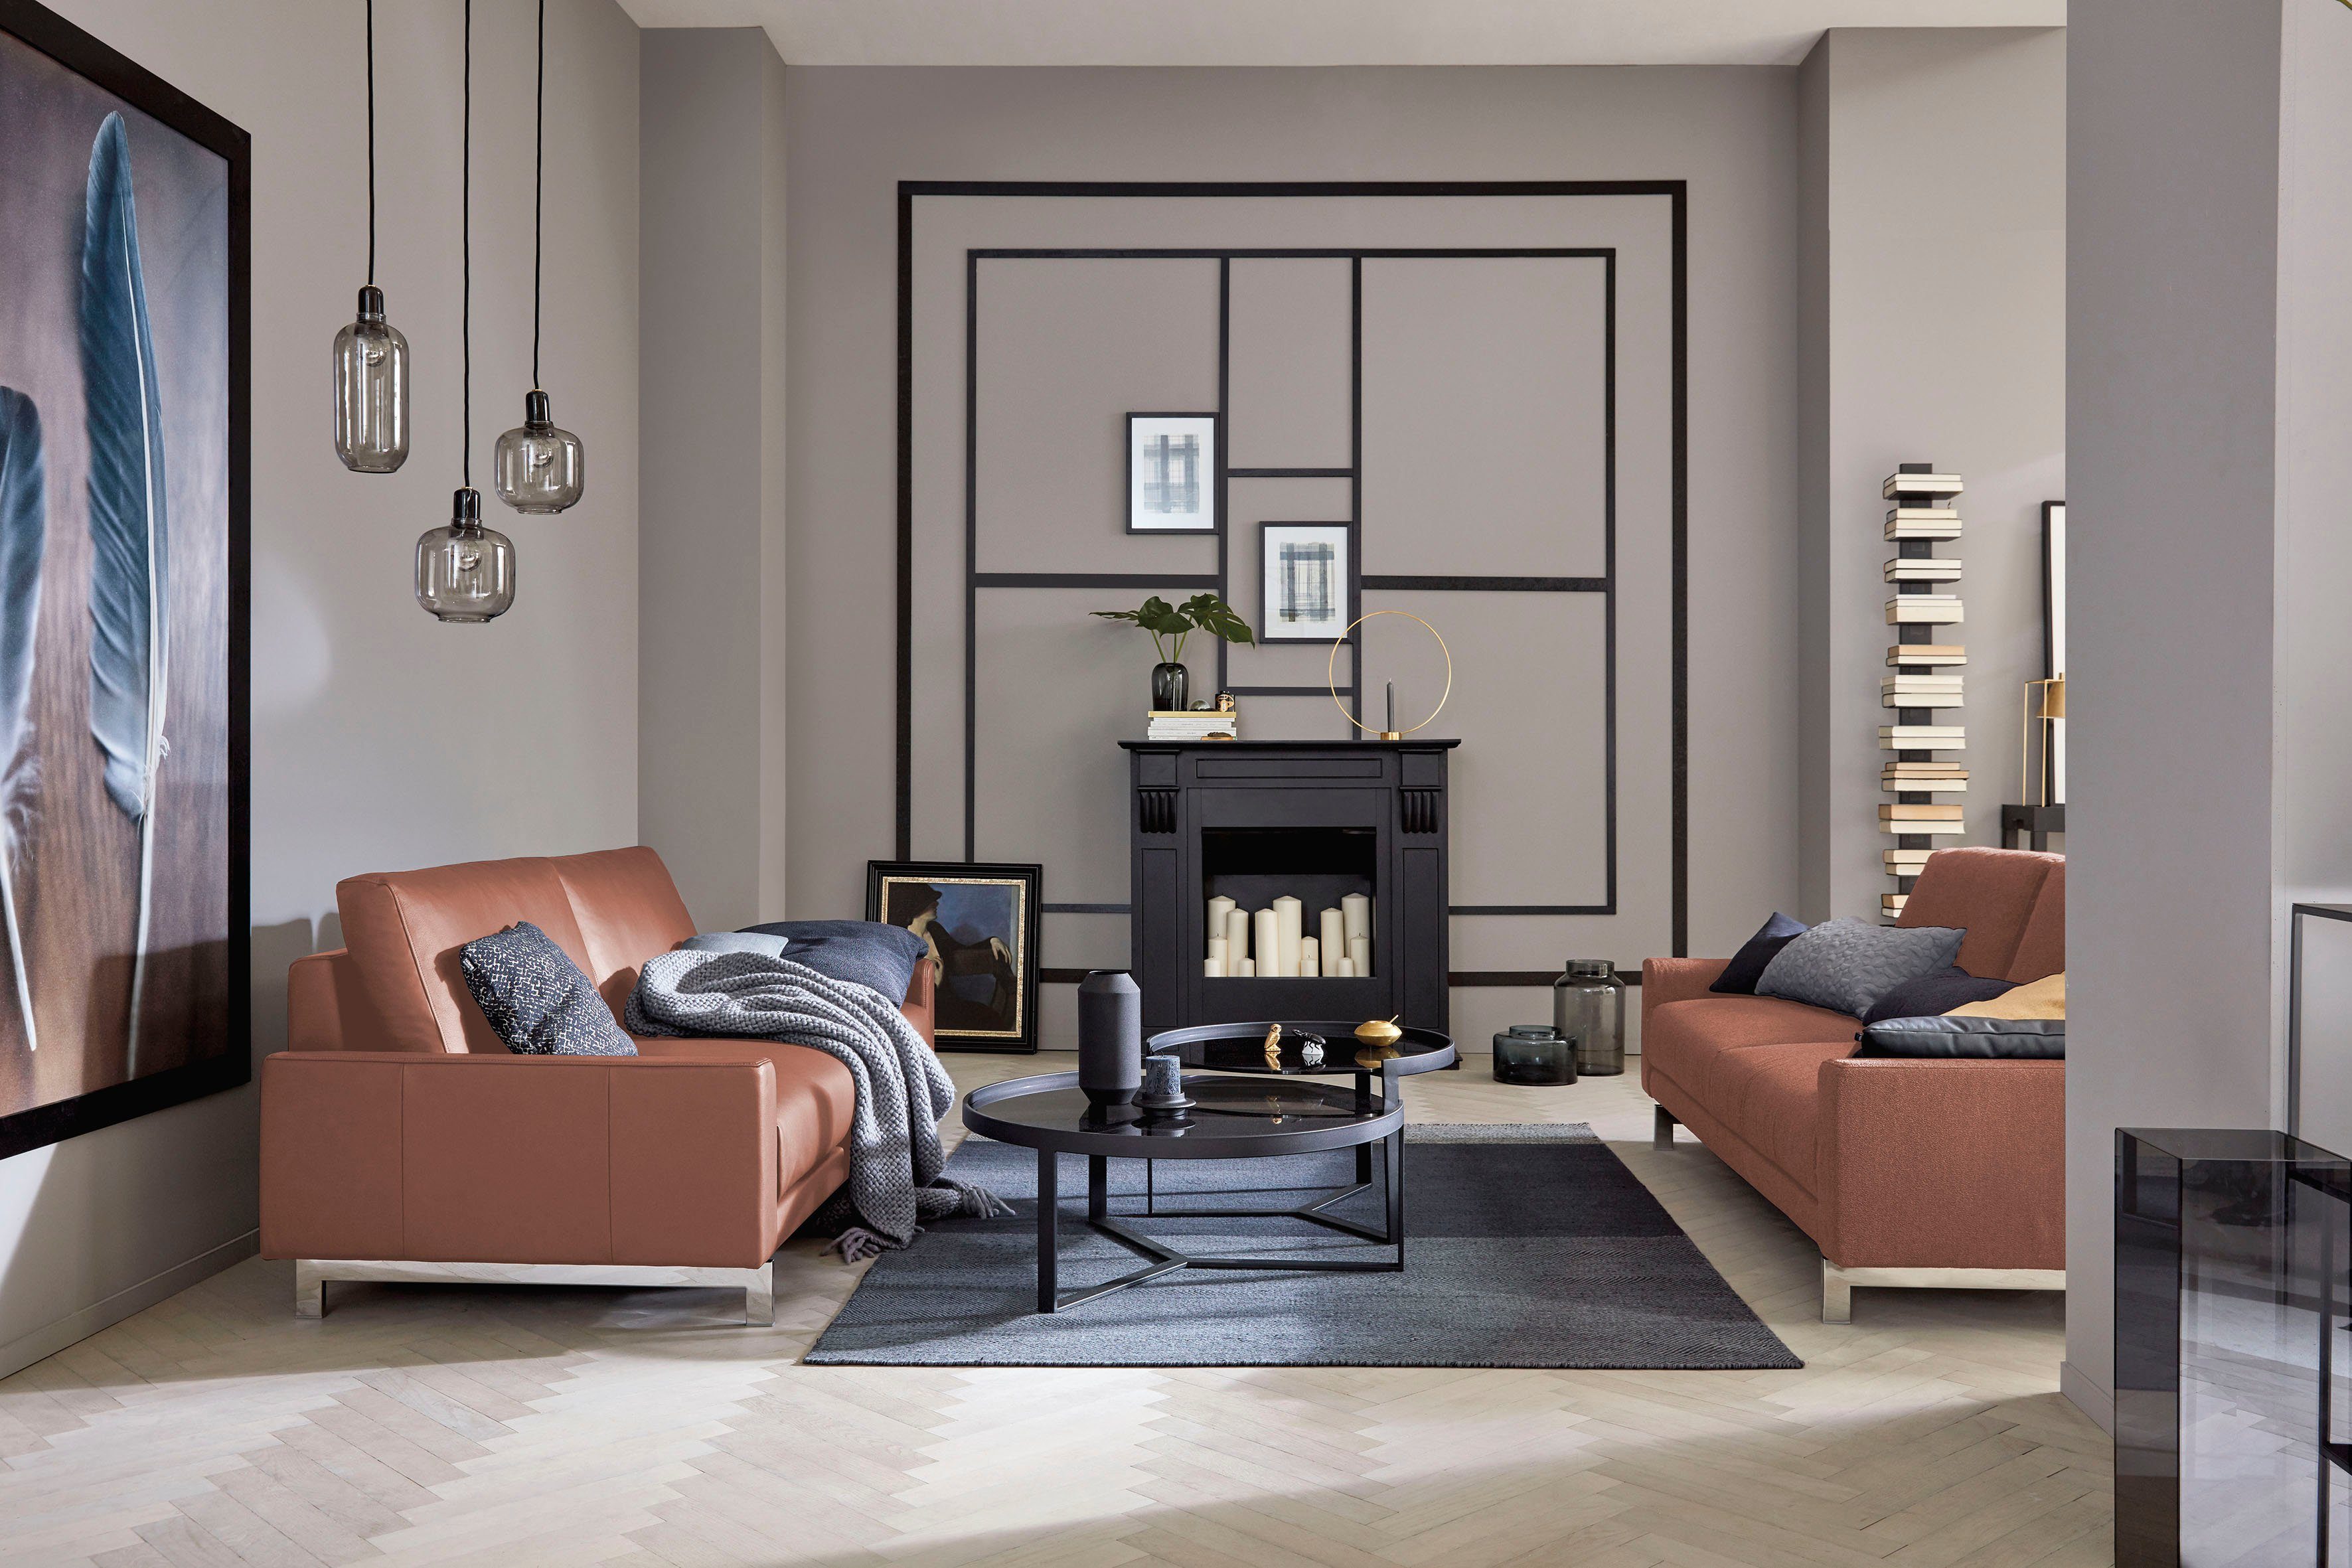 hülsta sofa 2-Sitzer hs.450, chromfarben glänzend, Armlehne niedrig, cm Fuß Breite 164